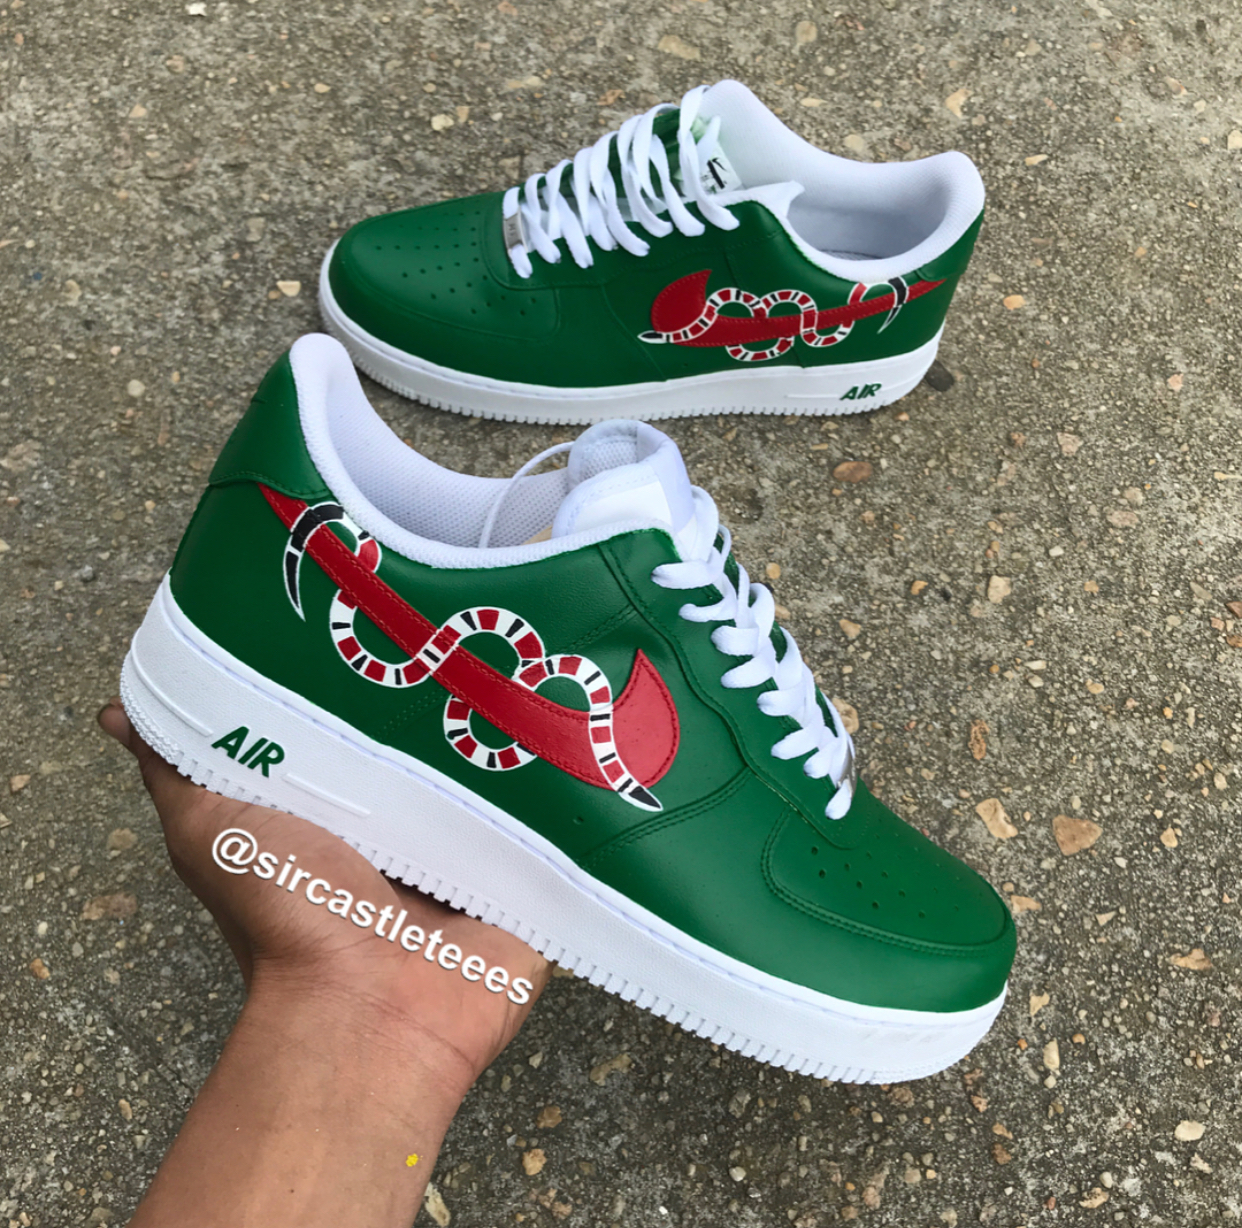 Gucci x Nike Air Force 1 Customs